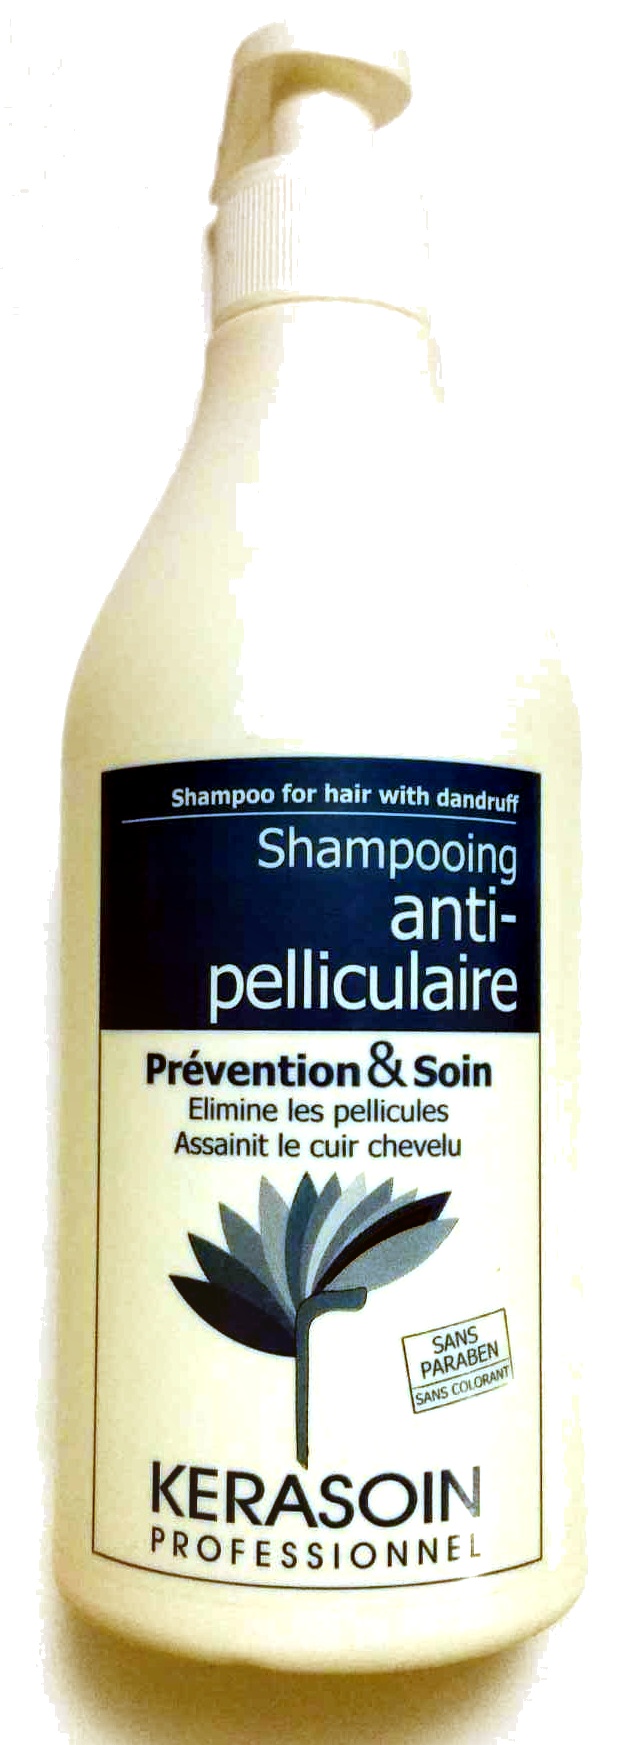 Kerasoin Professionel, Shampooing anti-pelliculaire, Prévention & Soin - Produto - fr